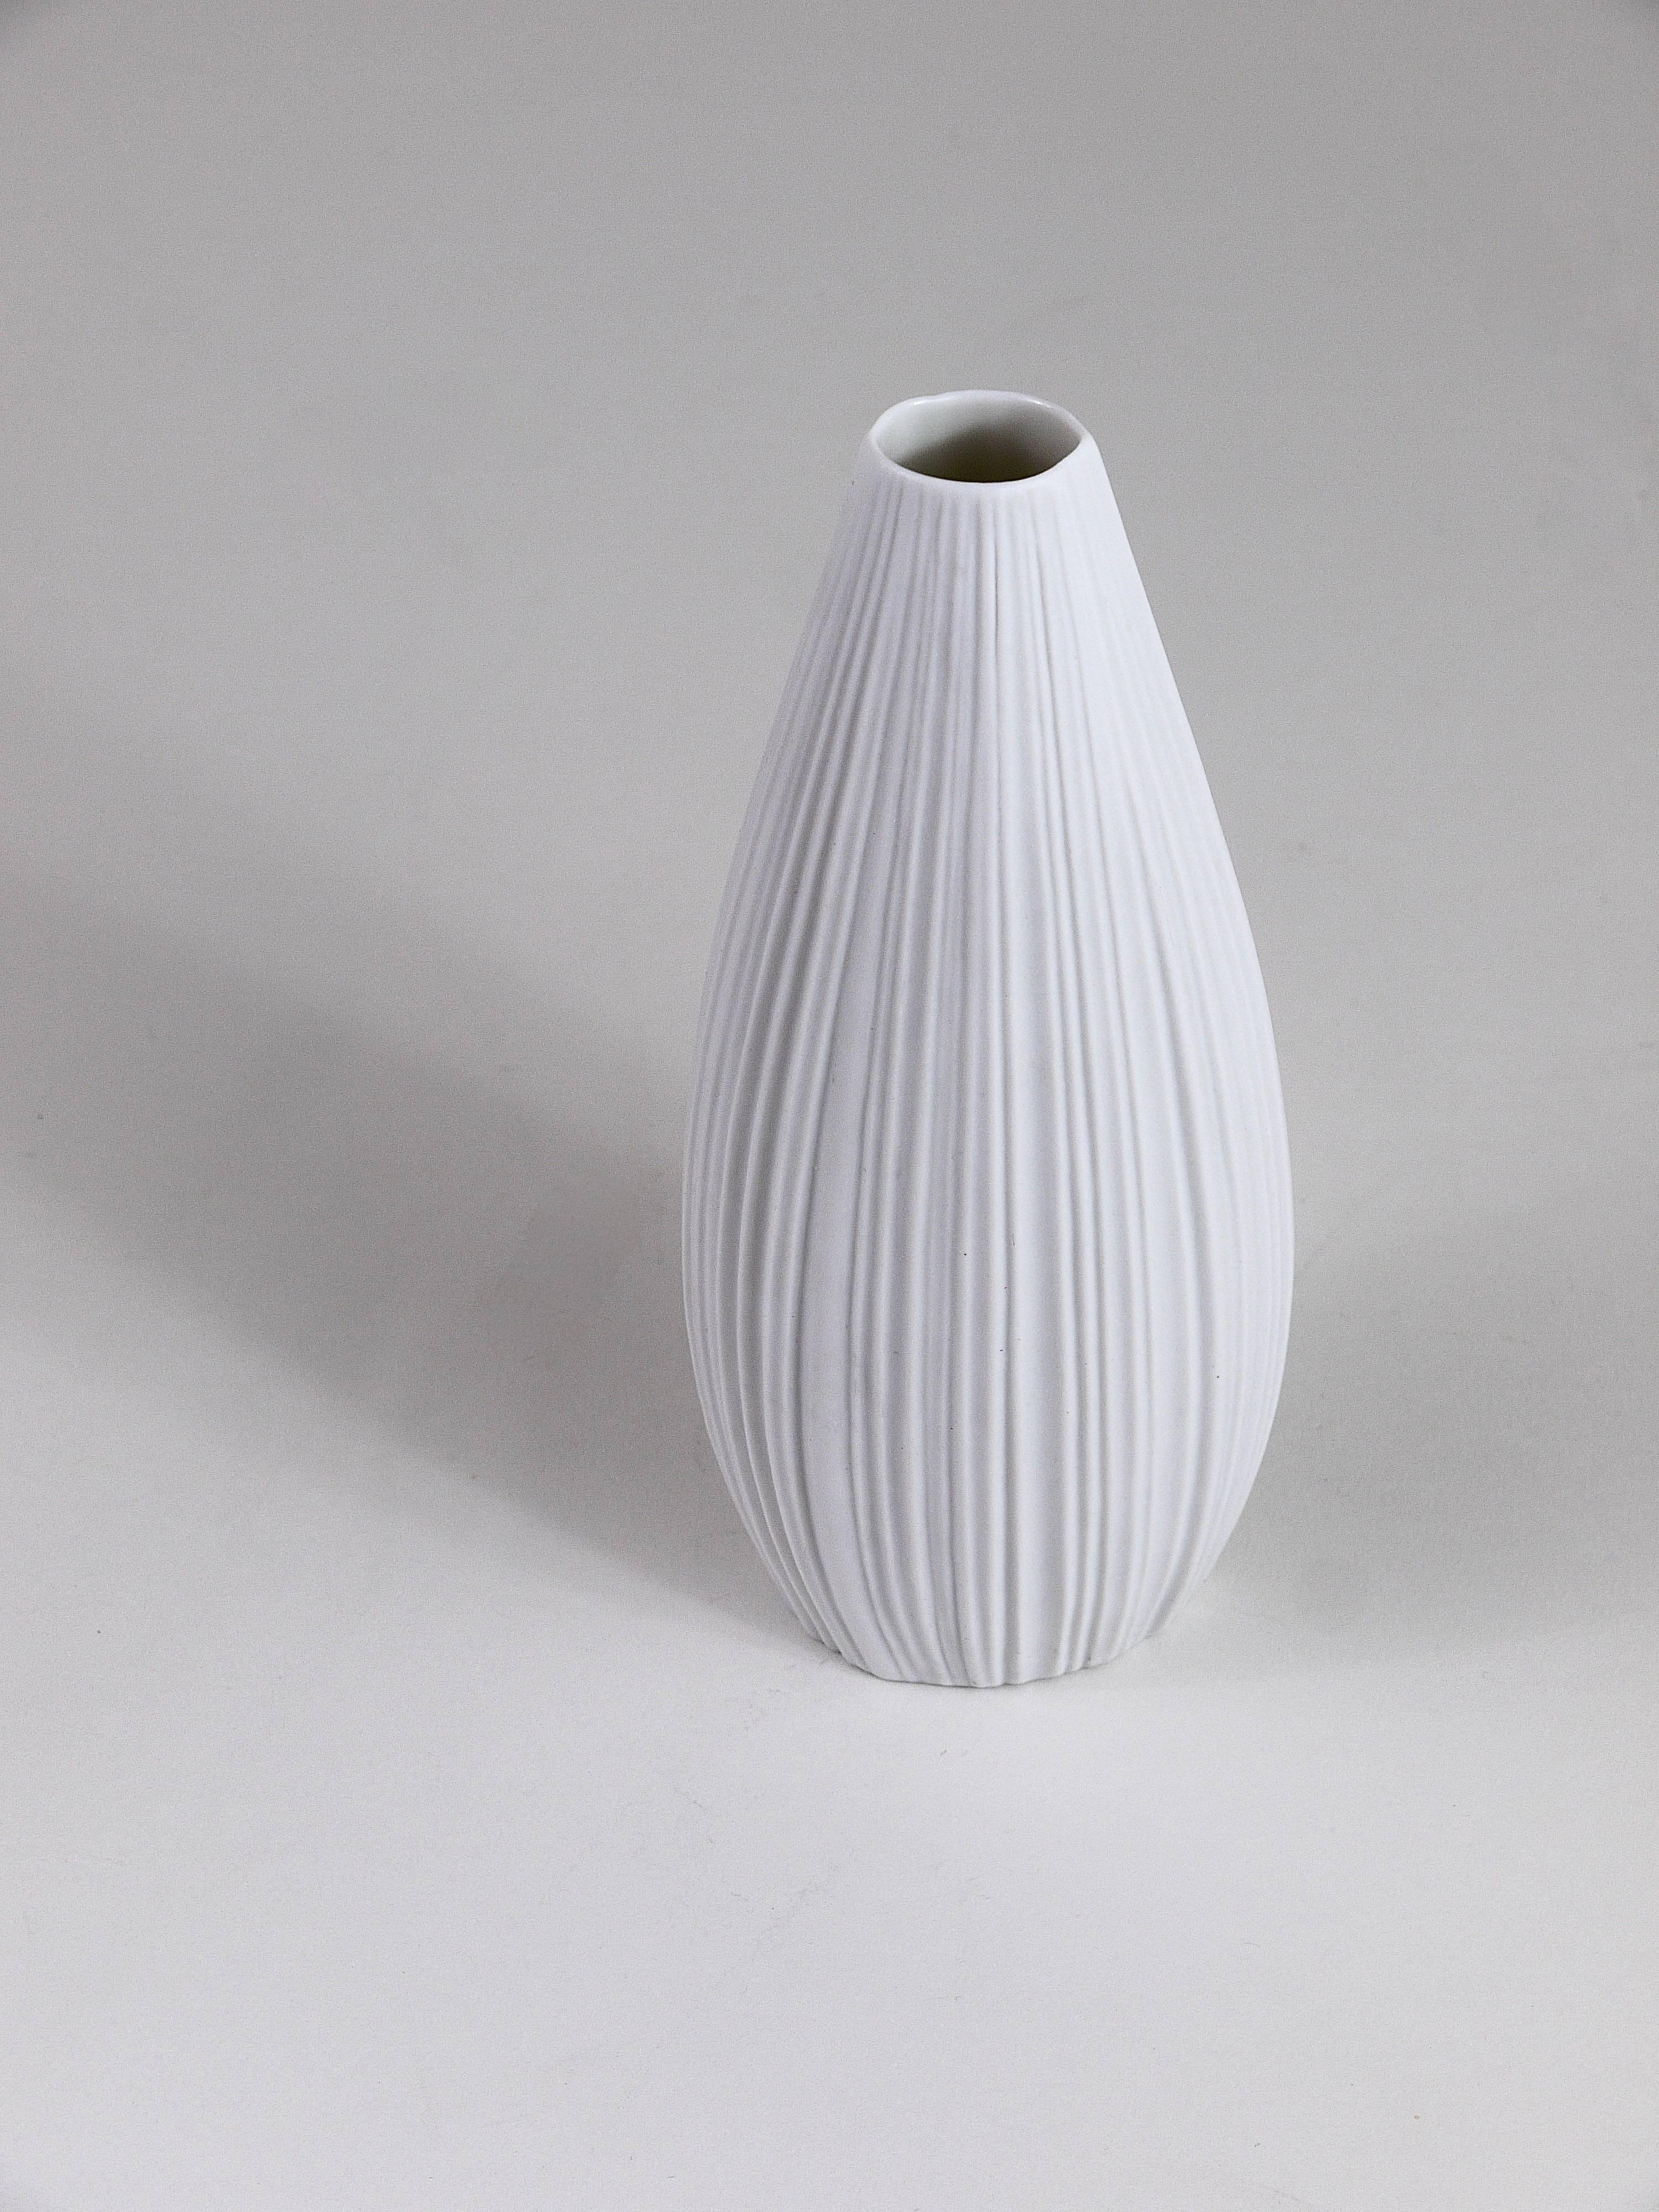 White Relief Striped Porcelain Vase, Martin Freyer, Rosenthal, Germany, 1960s For Sale 4